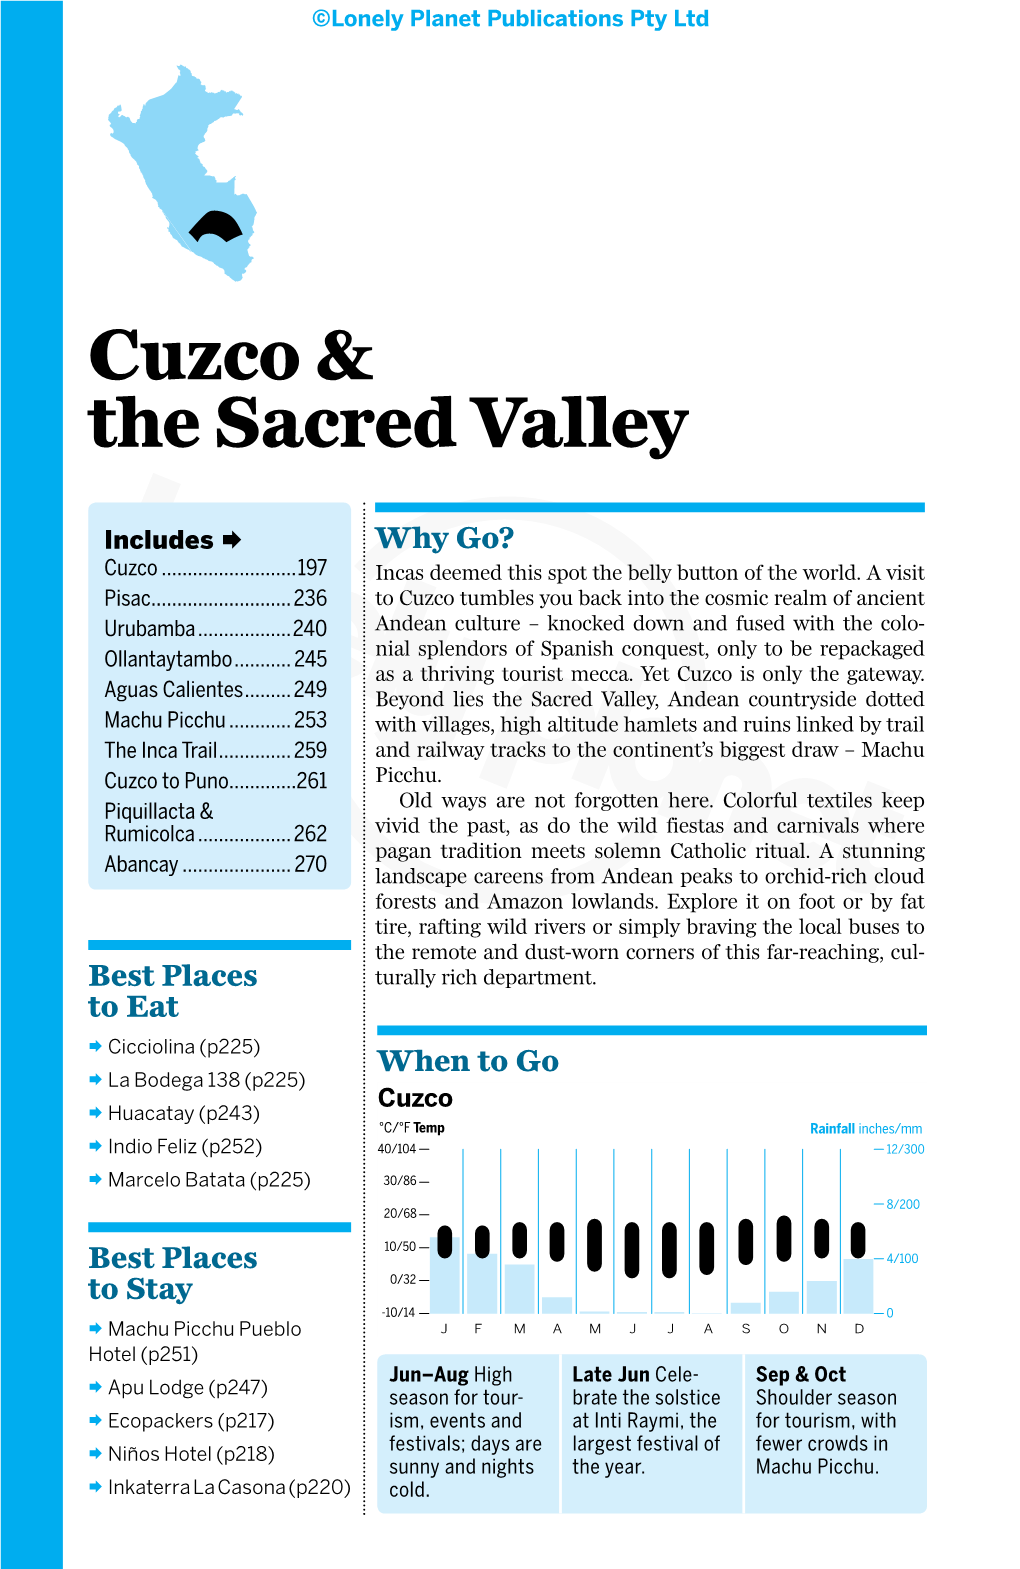 Cuzco & the Sacred Valley